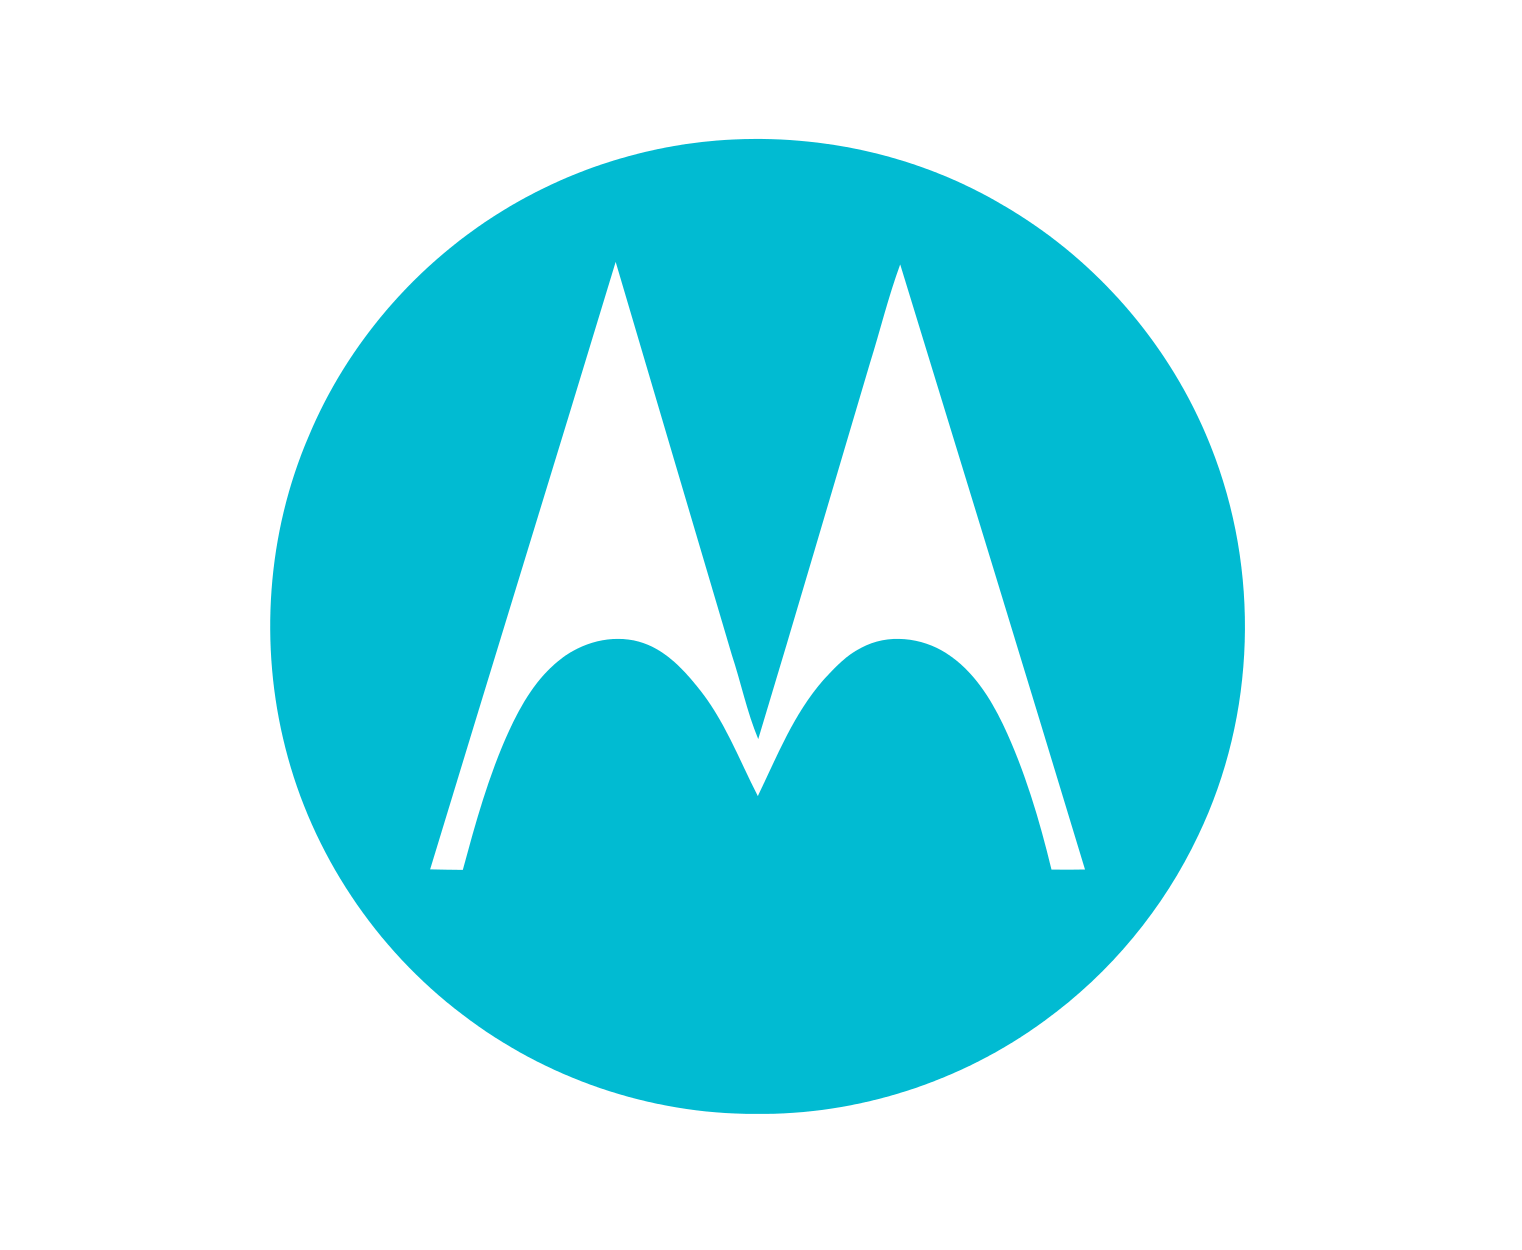 Motorola Logo - Motorola Logo, Motorola Symbol, History and Evolution